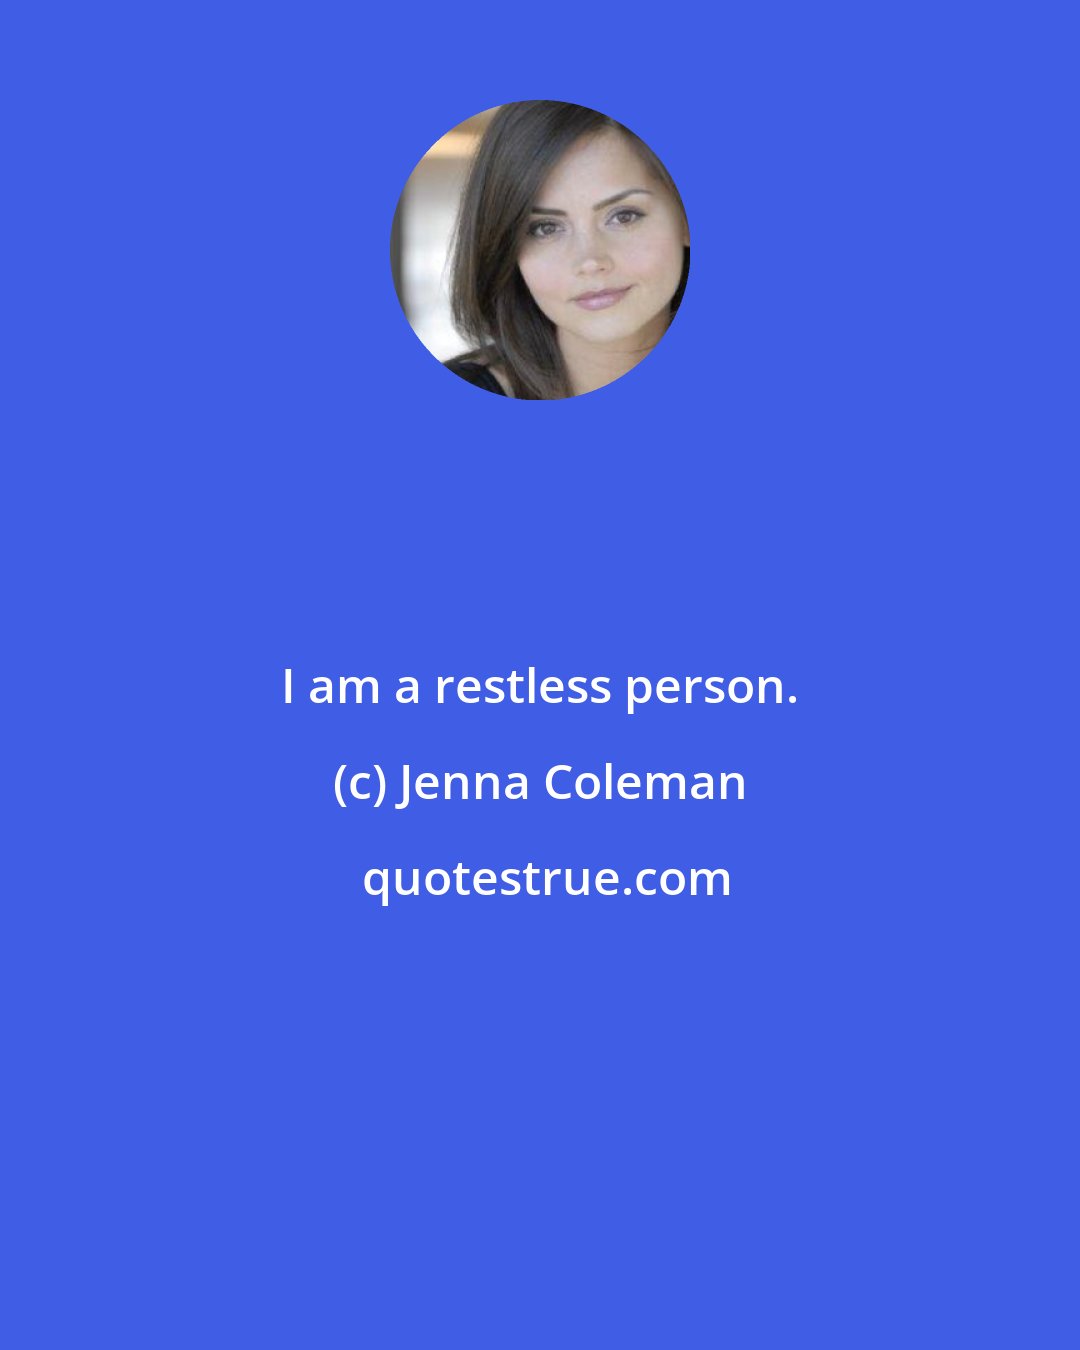 Jenna Coleman: I am a restless person.